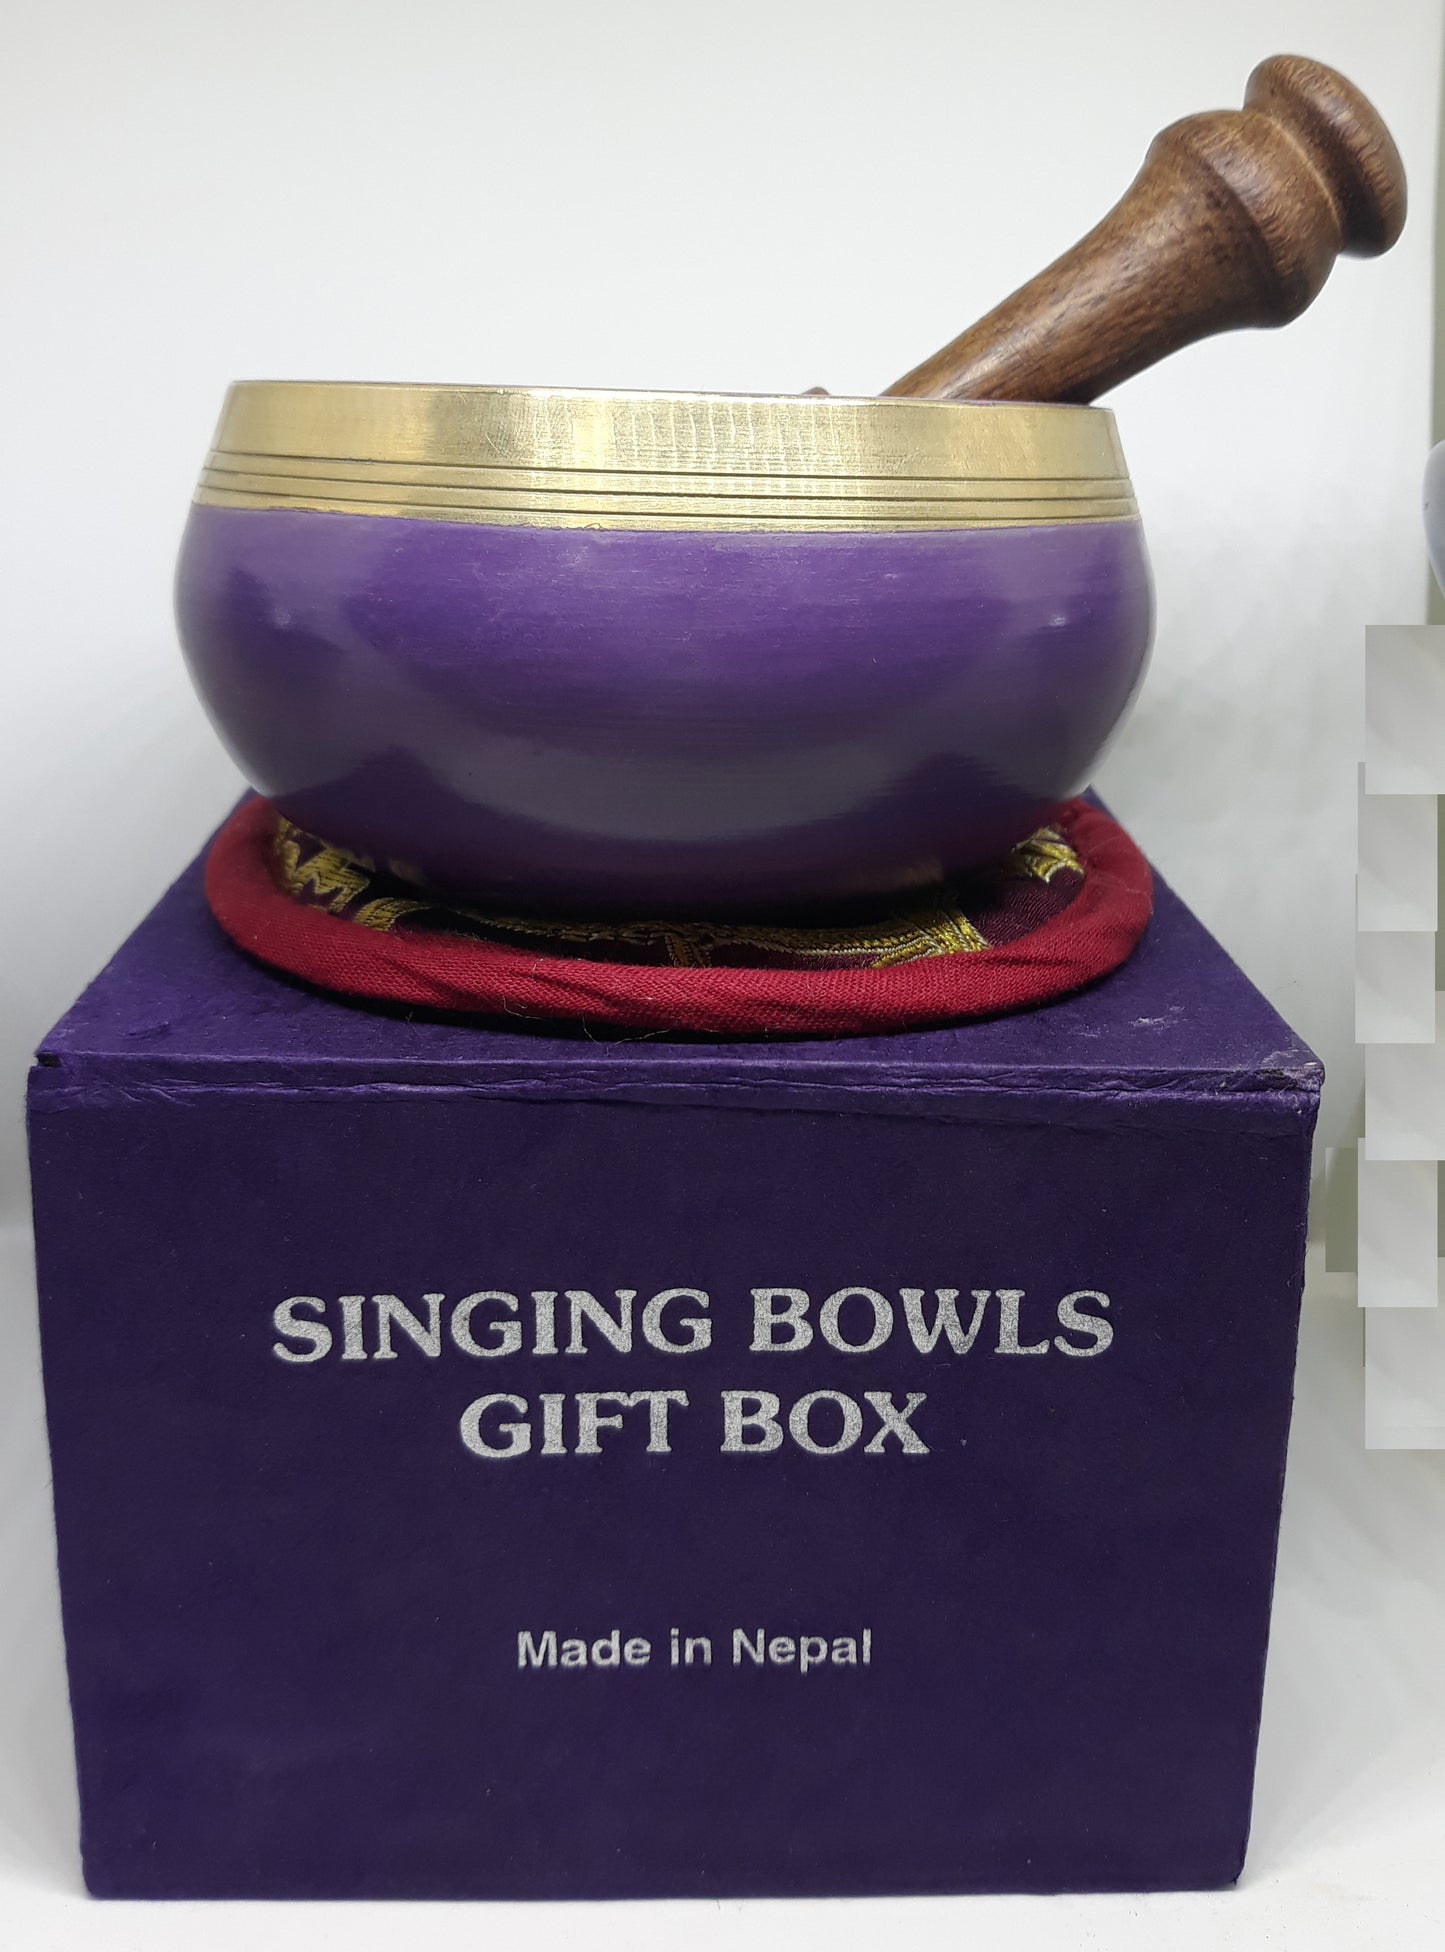 Chakra Singing Bowl - Crown:  approx. 3.5” Diameter